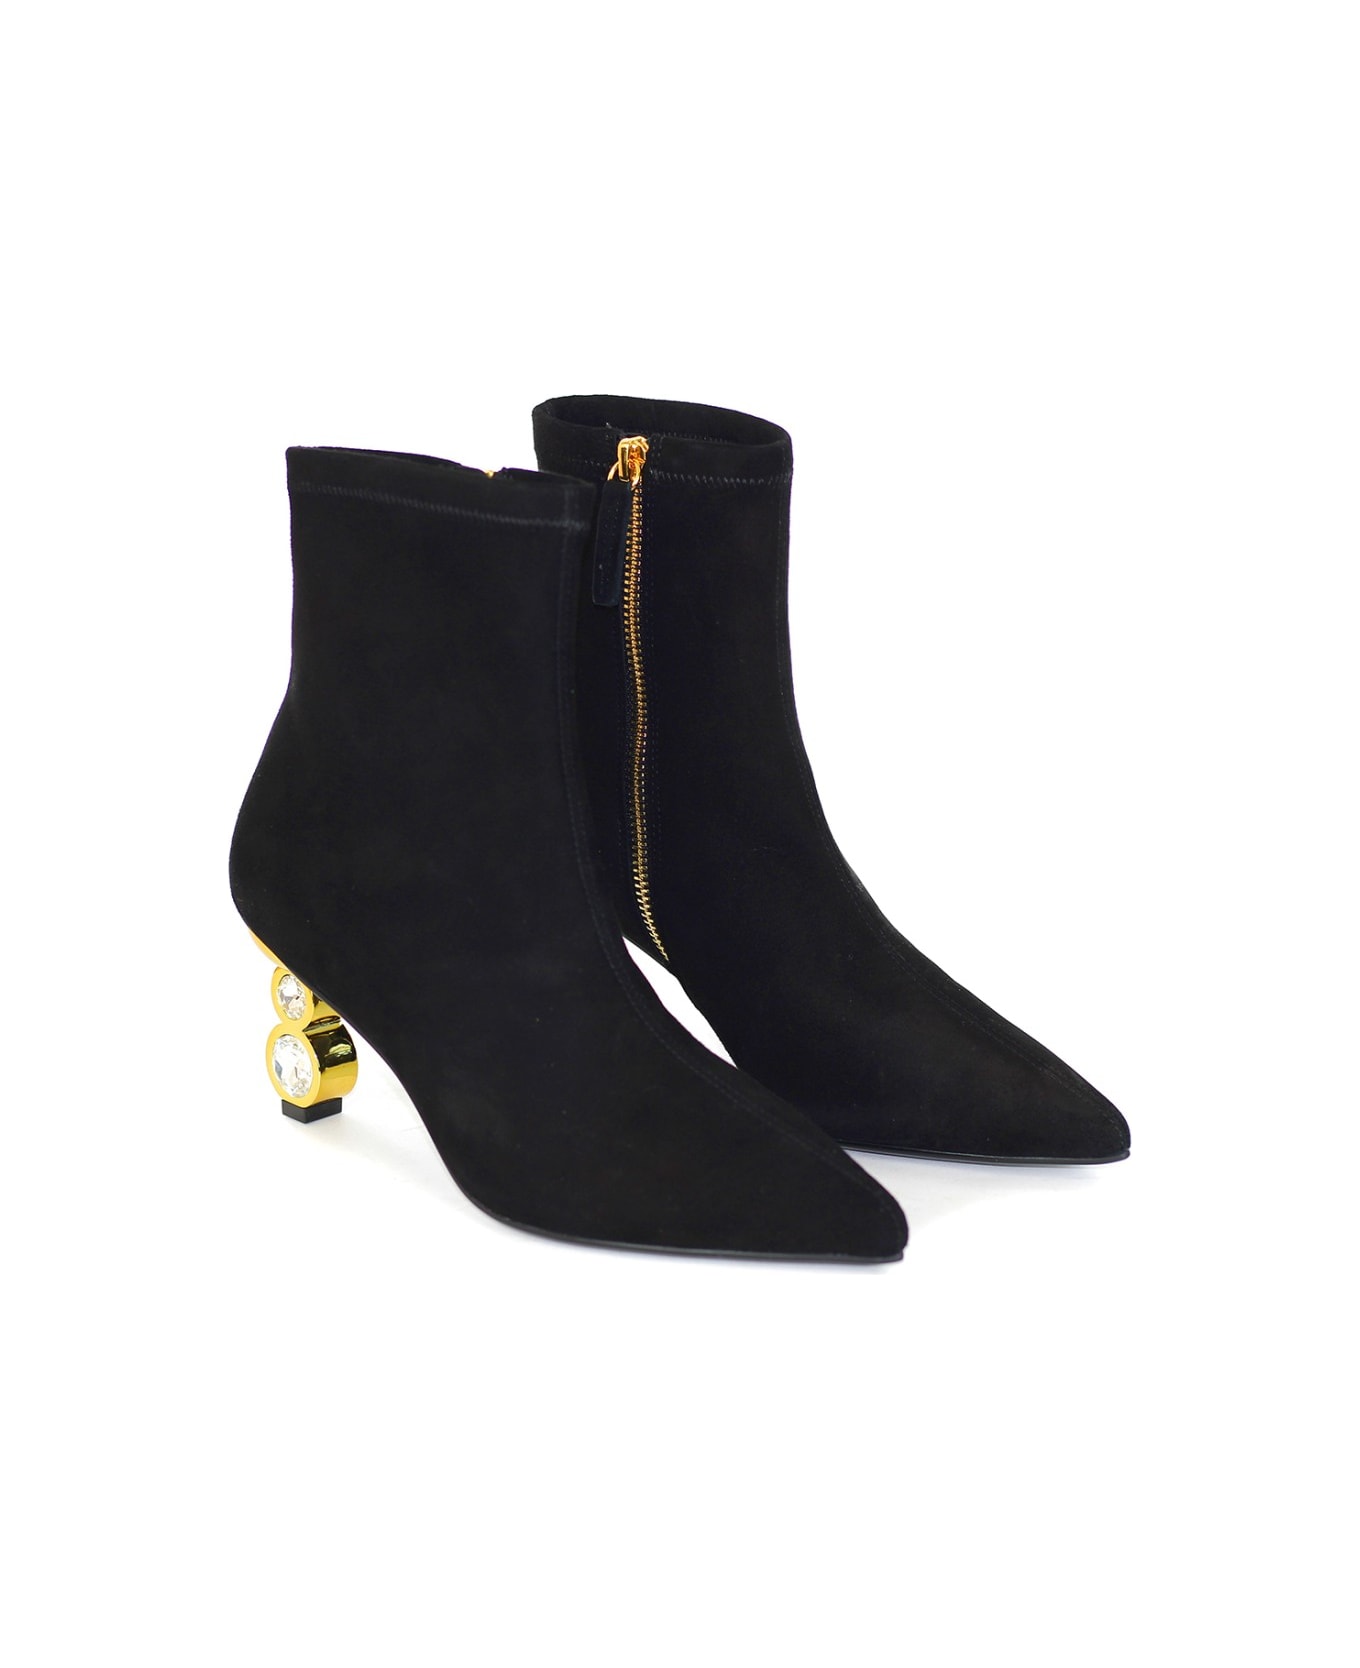 Kat Maconie Boots Ankle - Black Gold